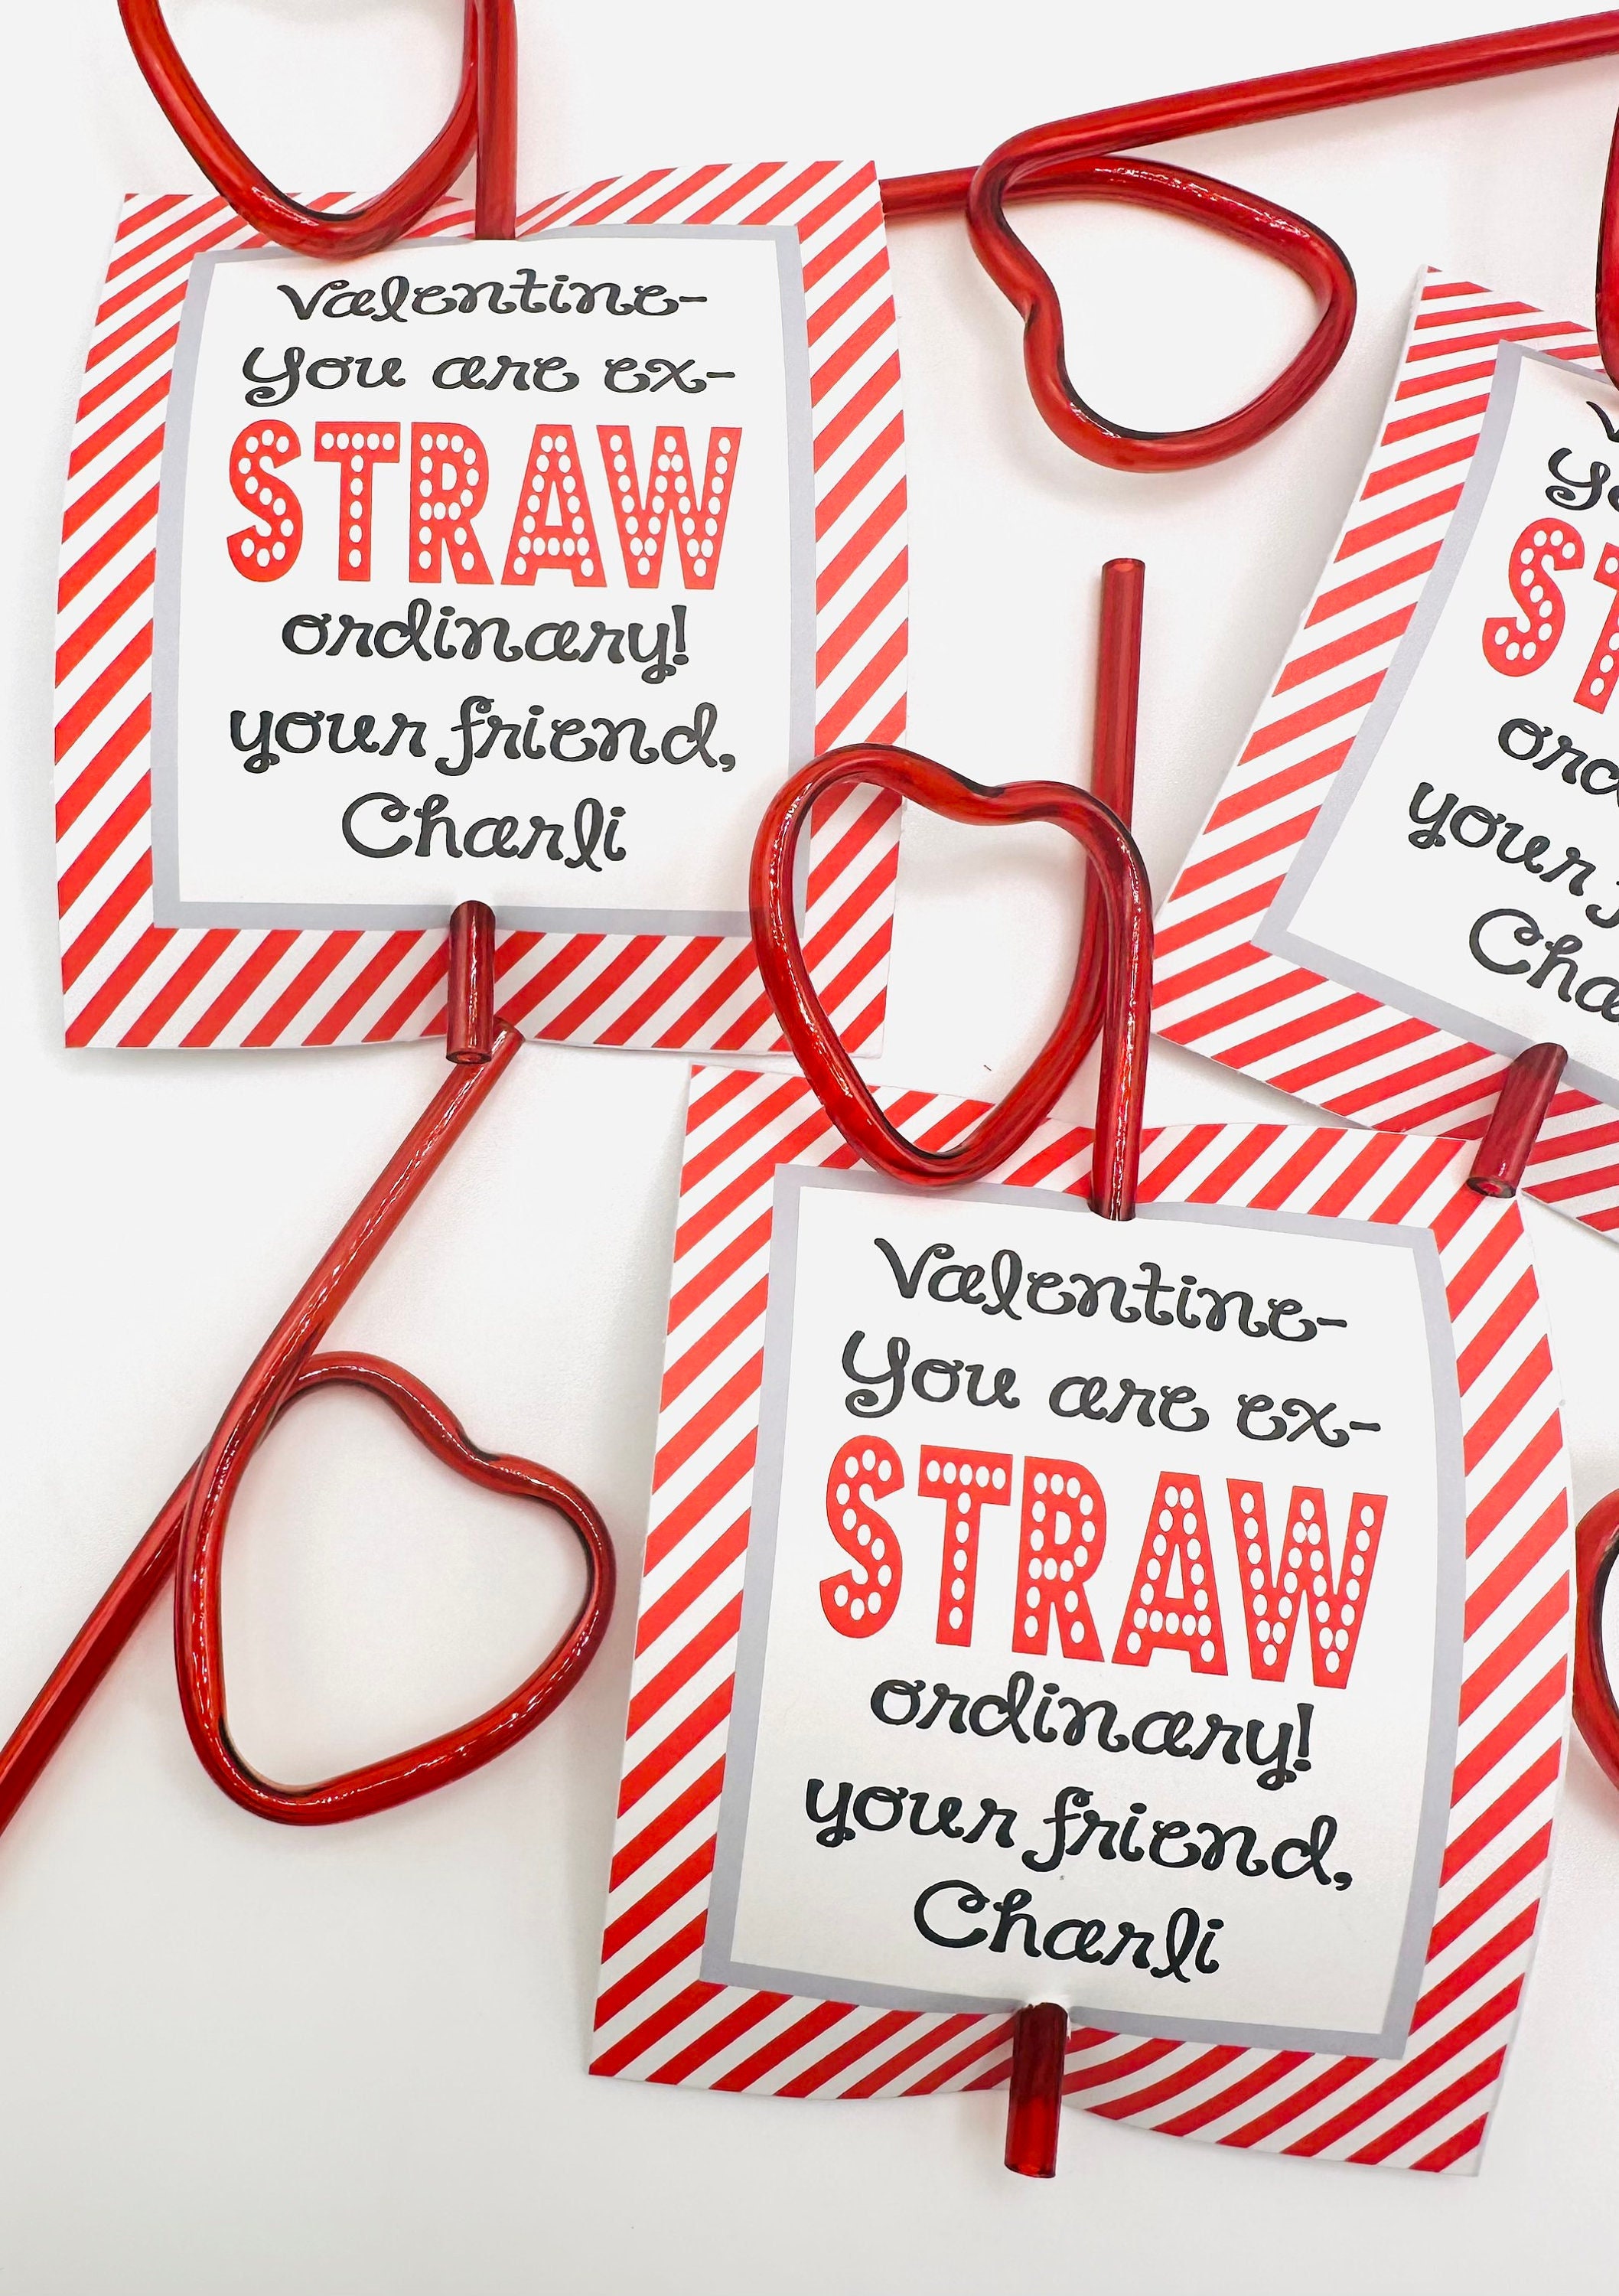 Valentine Crazy Straw Tags - Heart Cards to Celebrate Valentine's Day